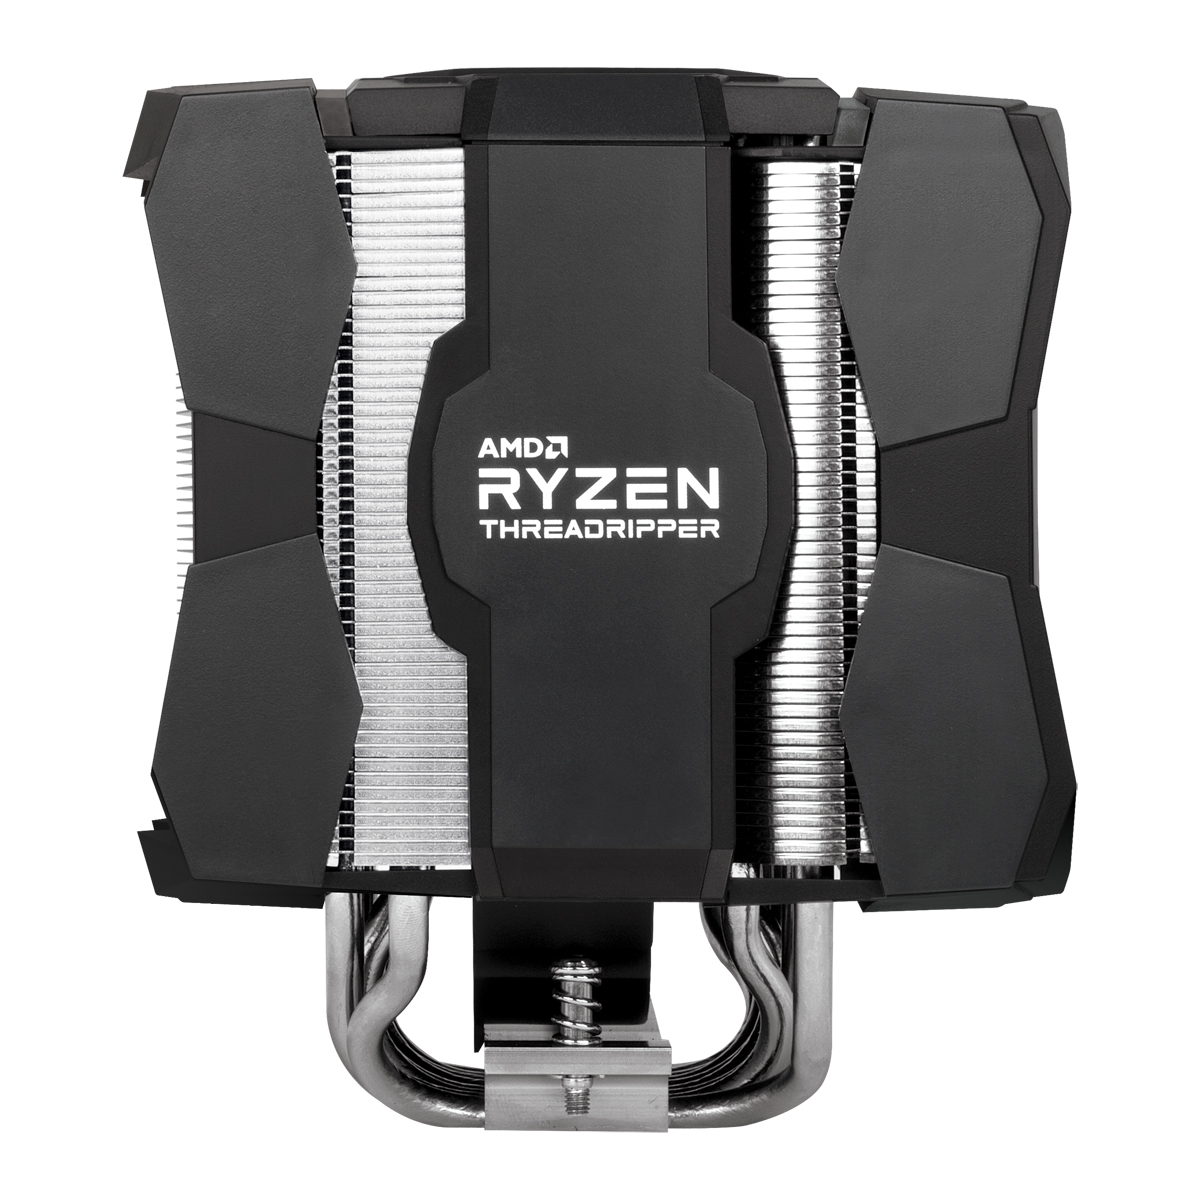 Dual Tower CPU Cooler for AMD Ryzen™ Threadripper™ ARCTIC Freezer 50 TR Side View